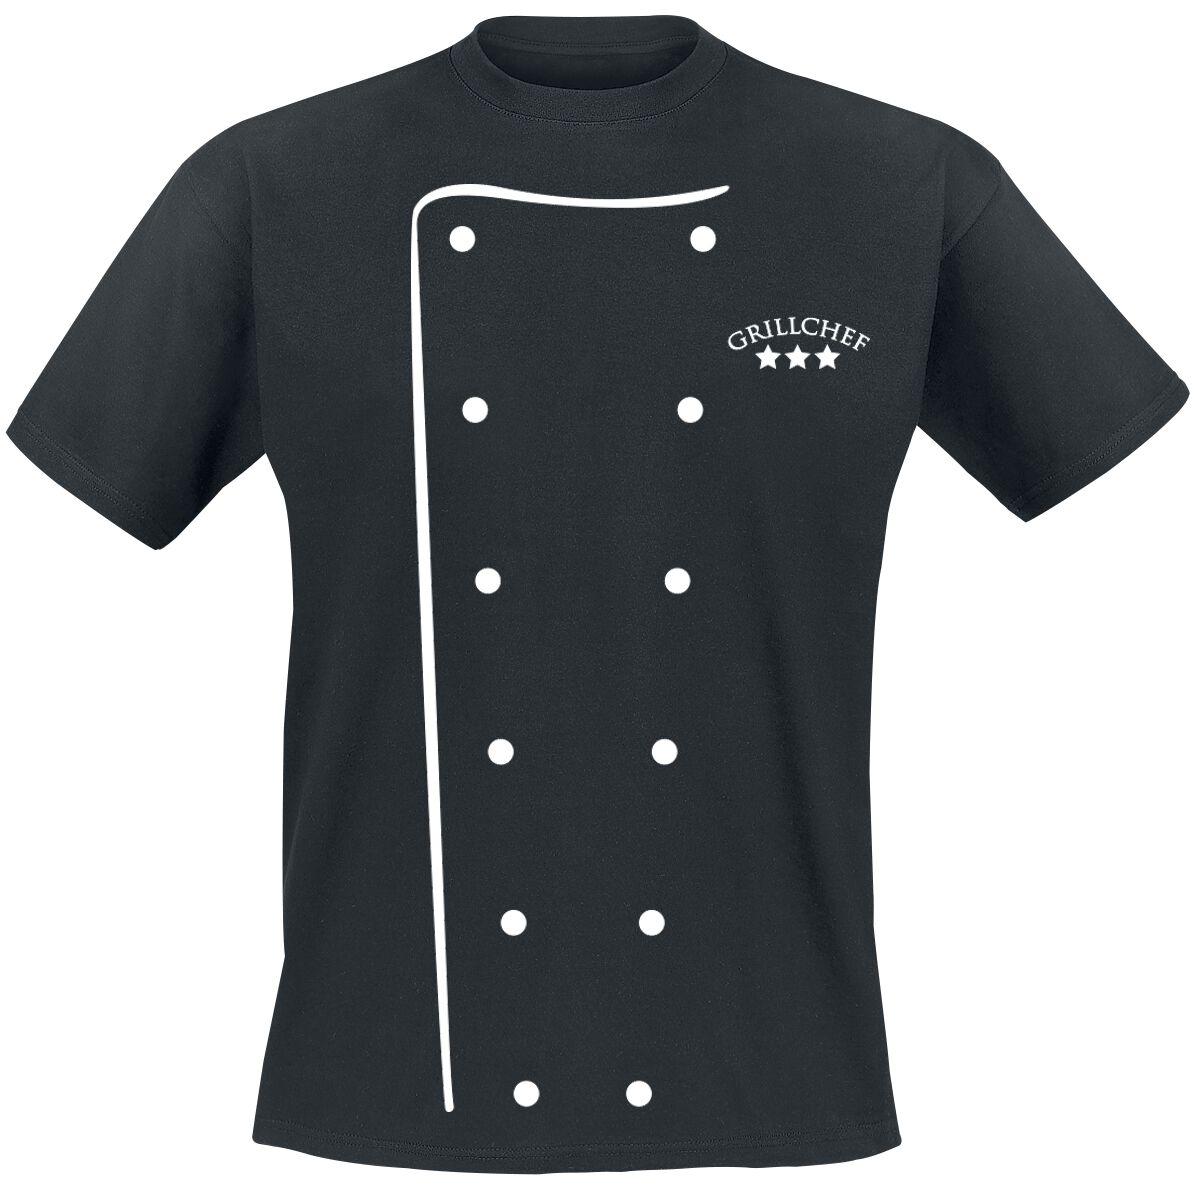 Food Grillchef T-Shirt schwarz in 3XL